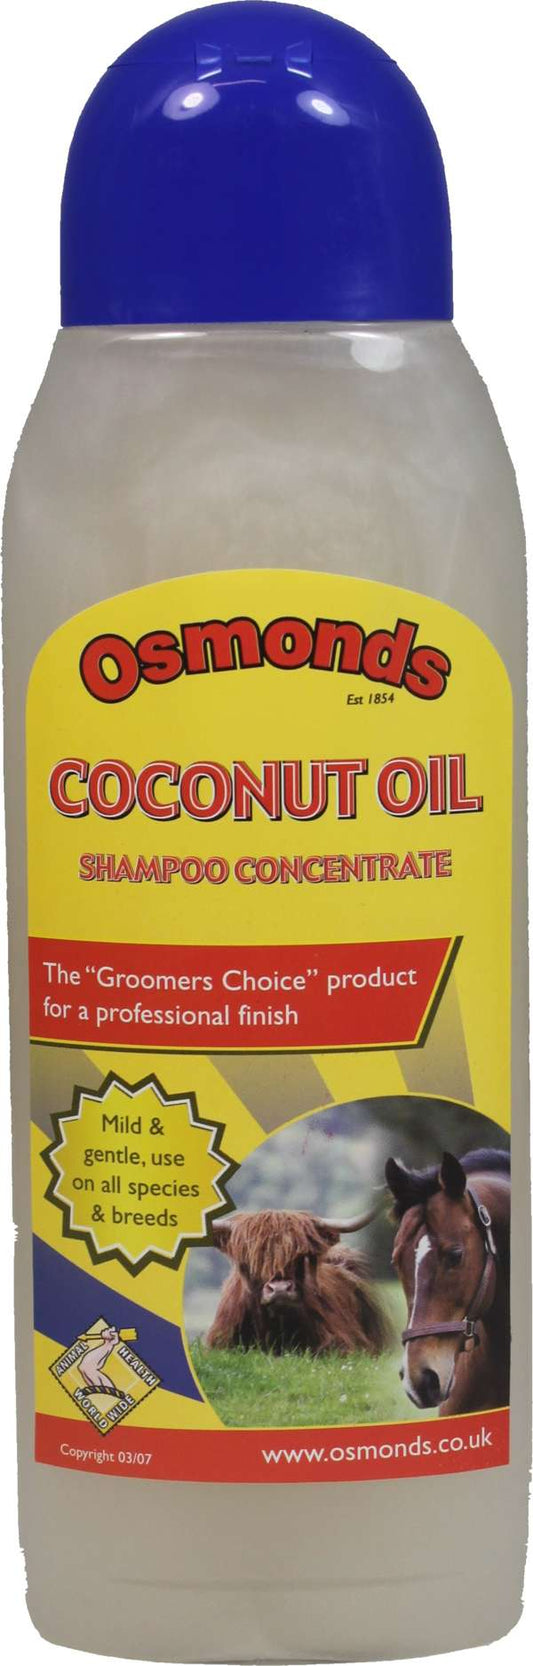 Osmonds Coconut Oil Shampoo Concentrate 1 Litre